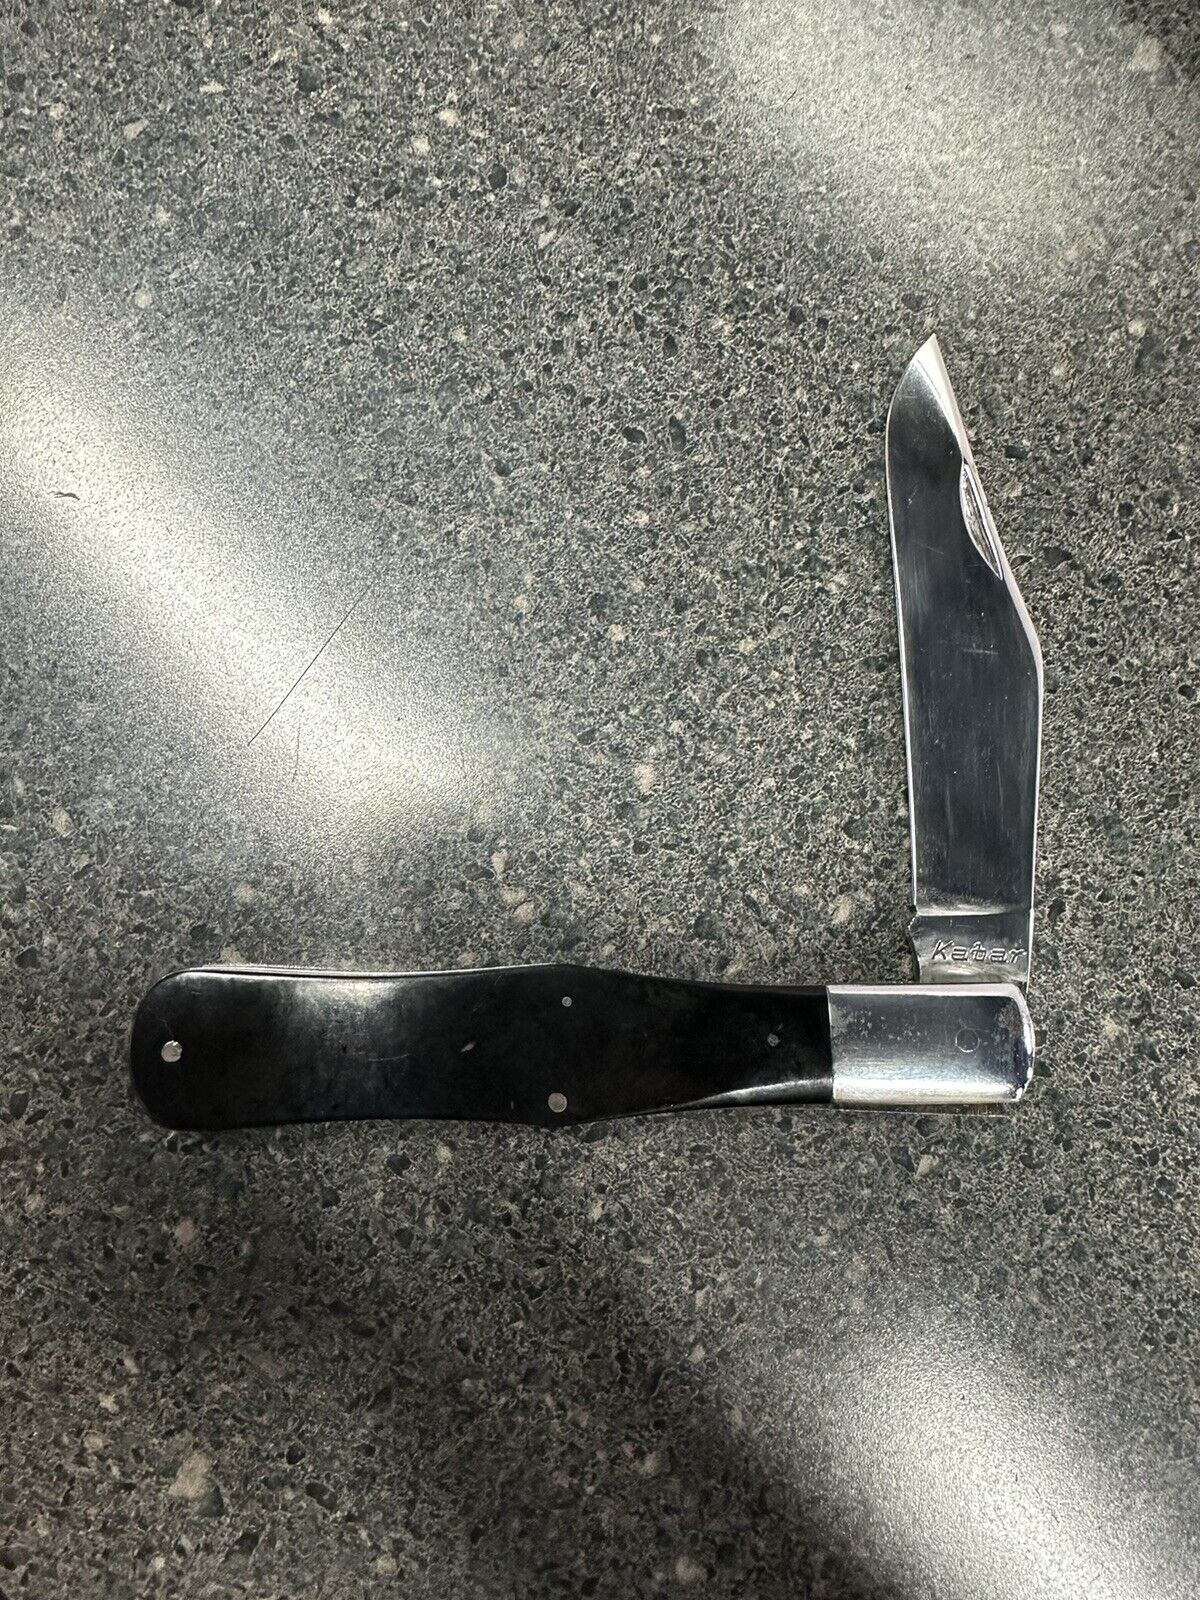 KABAR 1177 USA Pocket Knife Folding Knife Coke Bottle Contour, KA-BAR